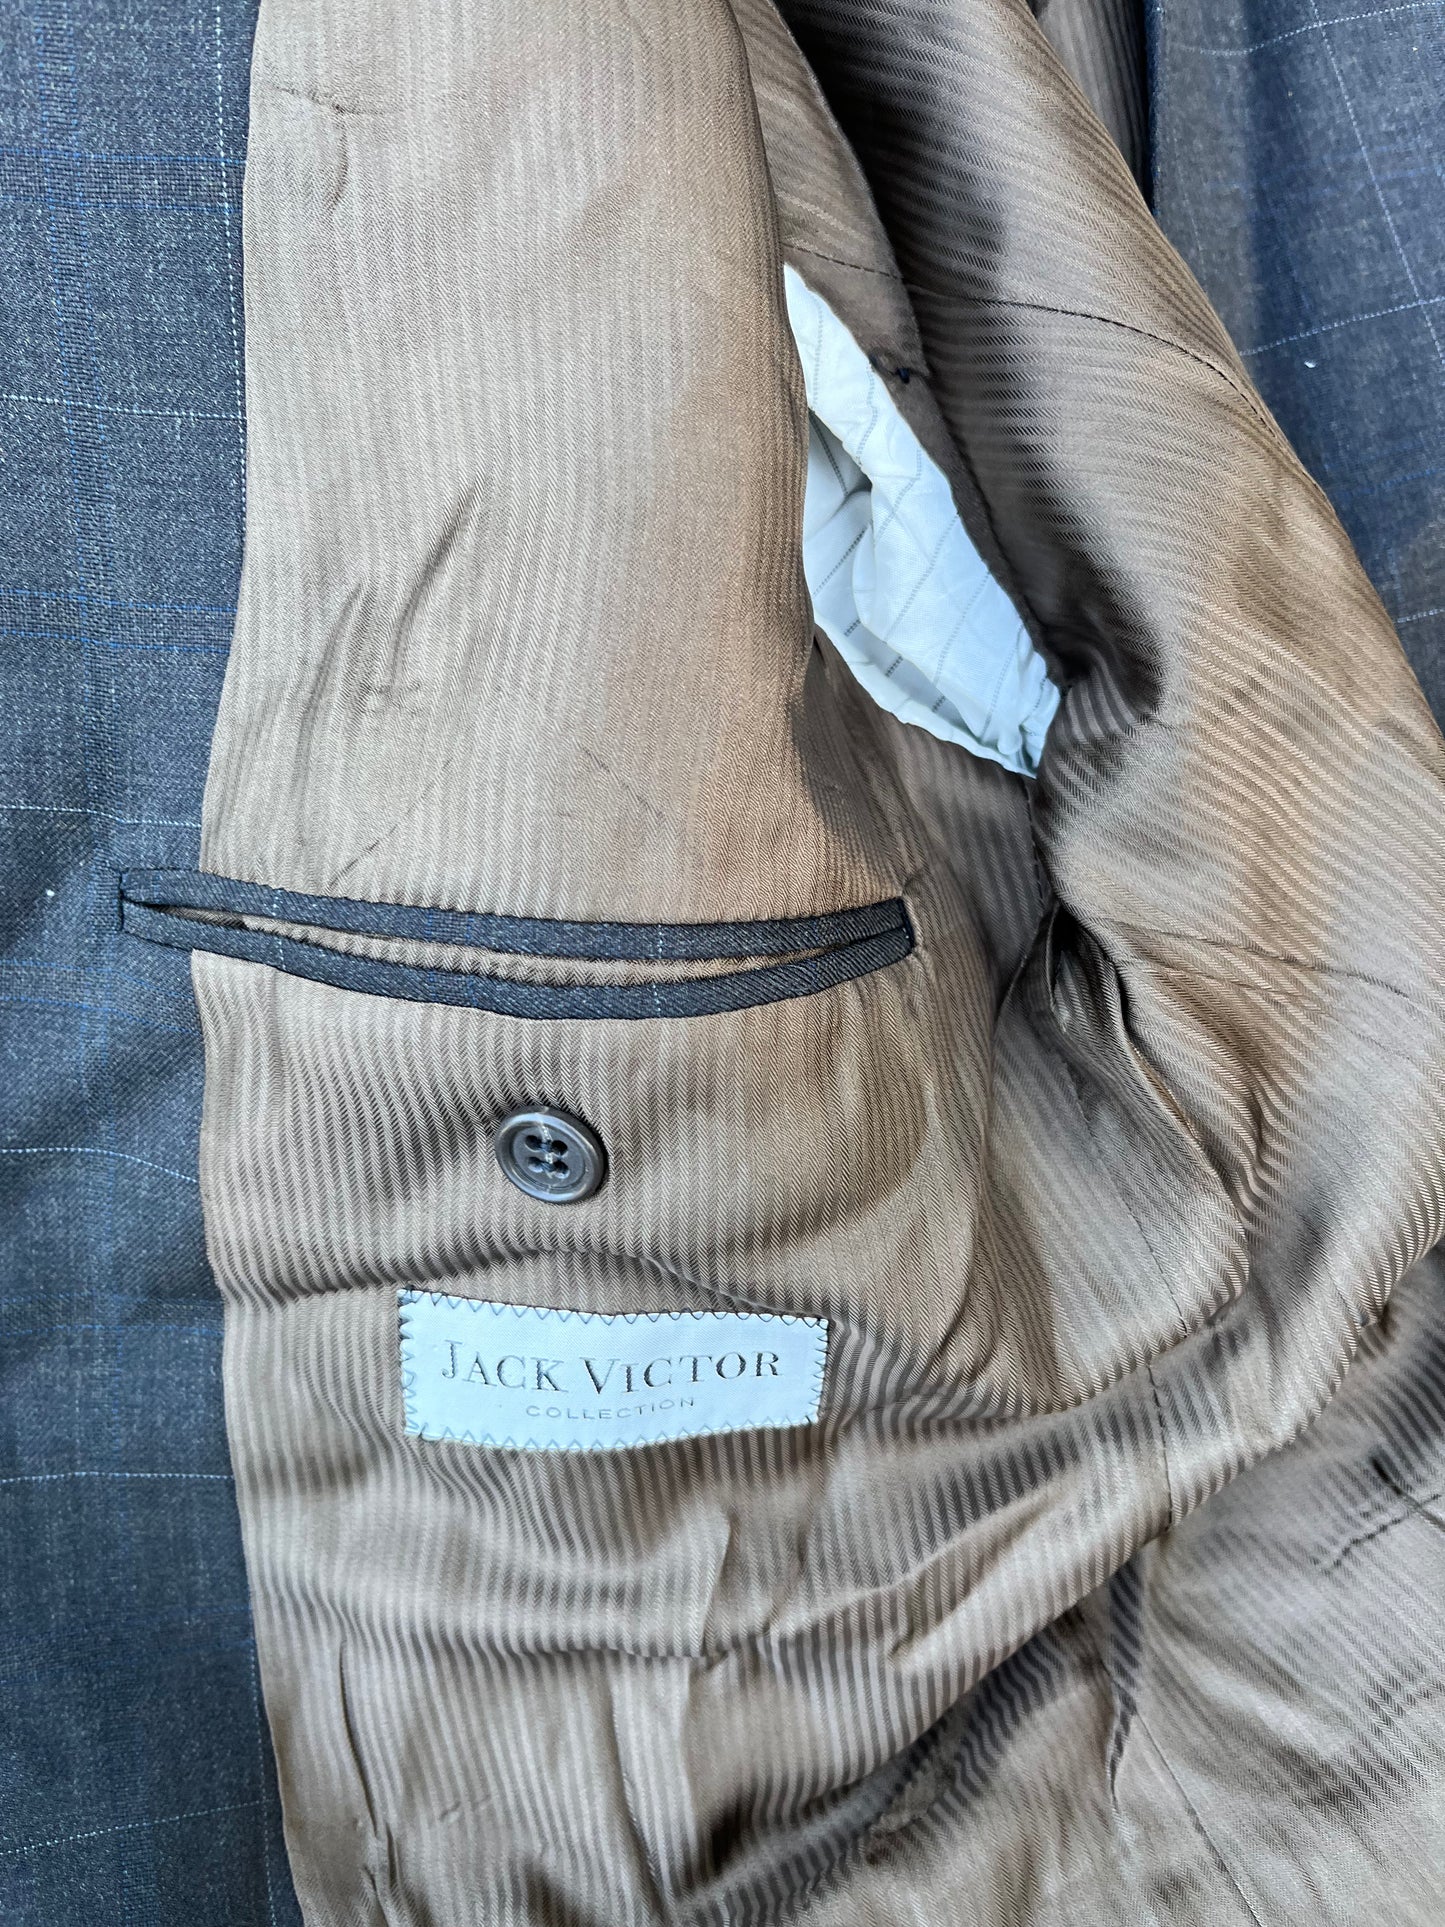 NEW GIRL: Nick Miller's Jack Victor Sport Coat (40)